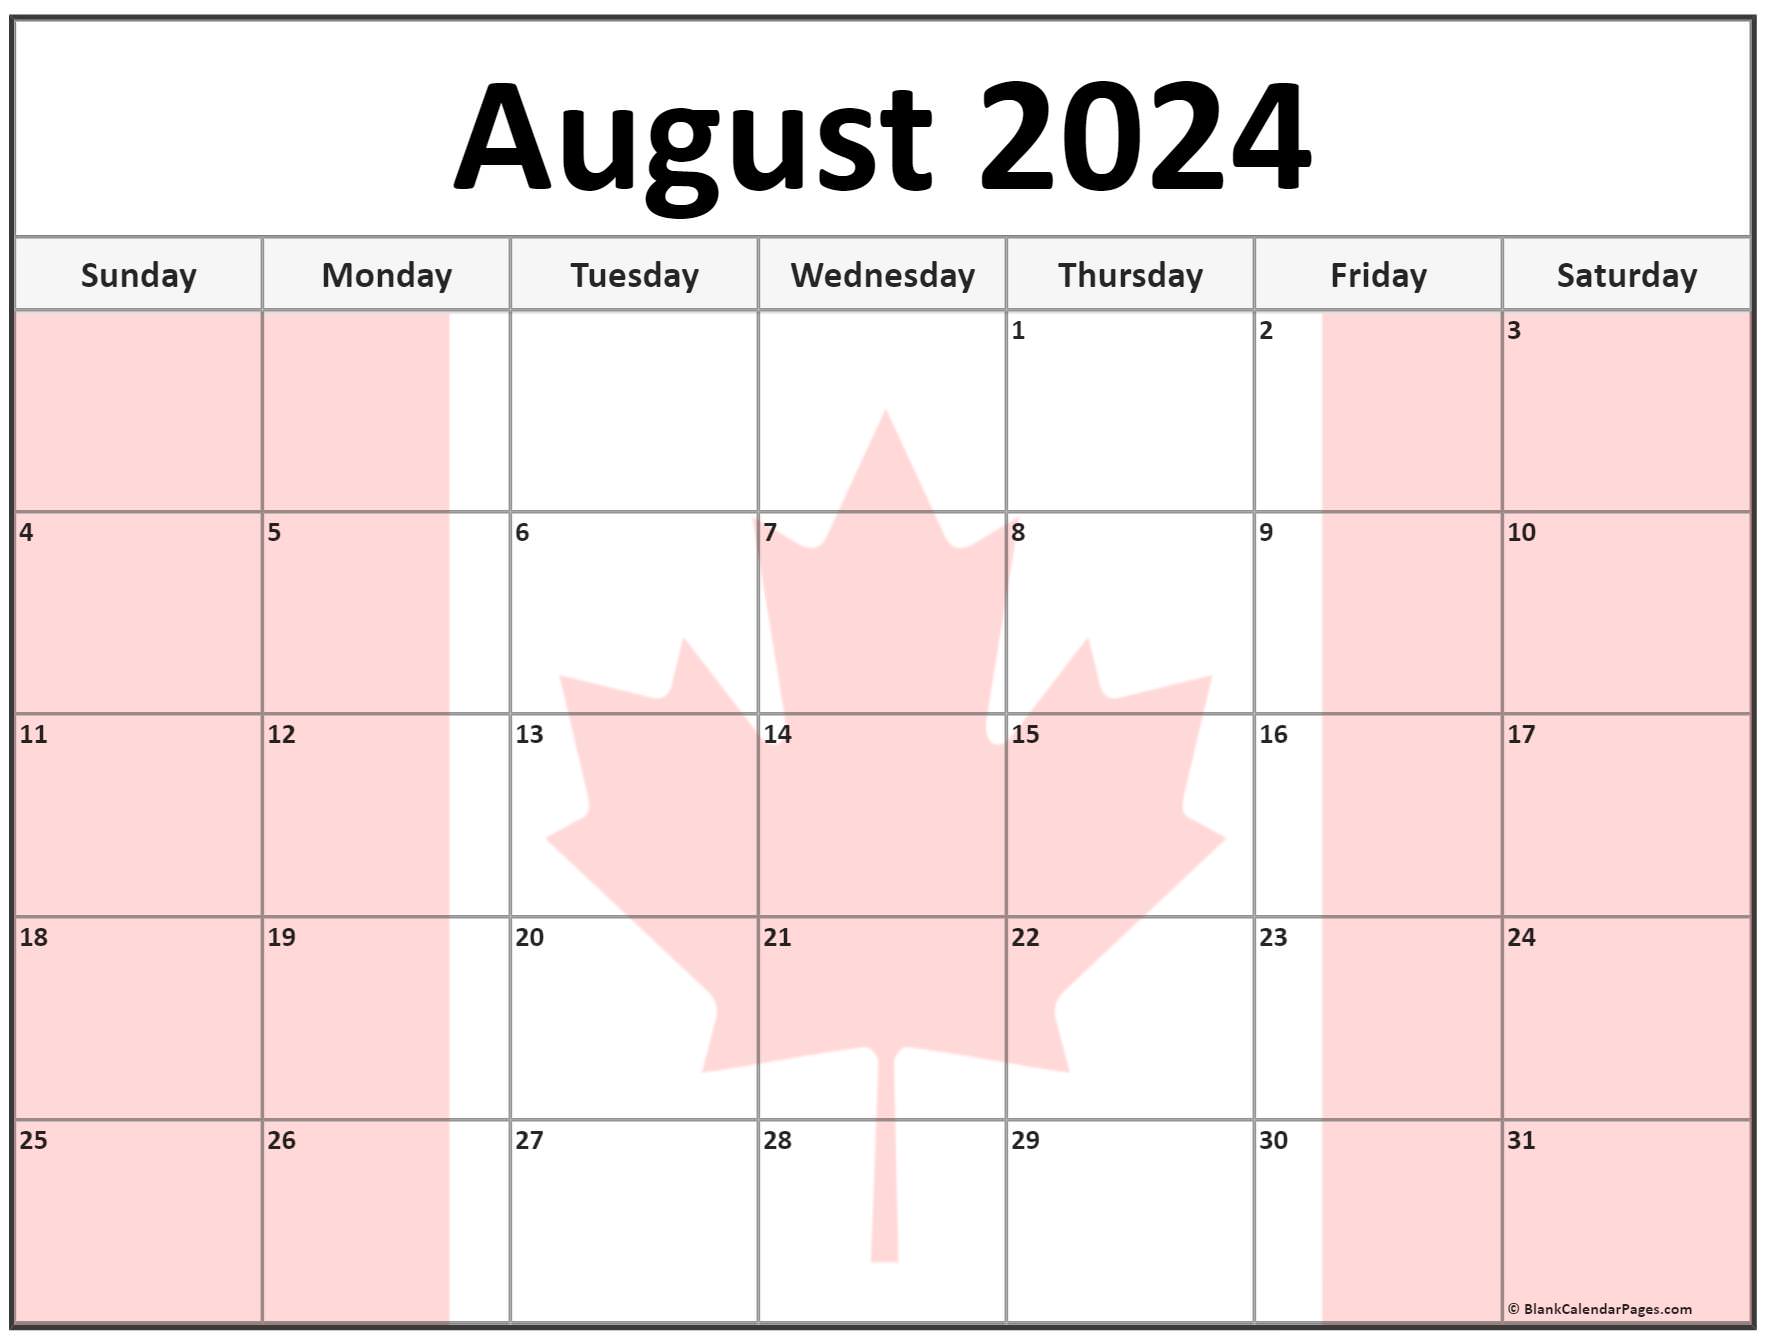 printable-cat-august-2022-calendar